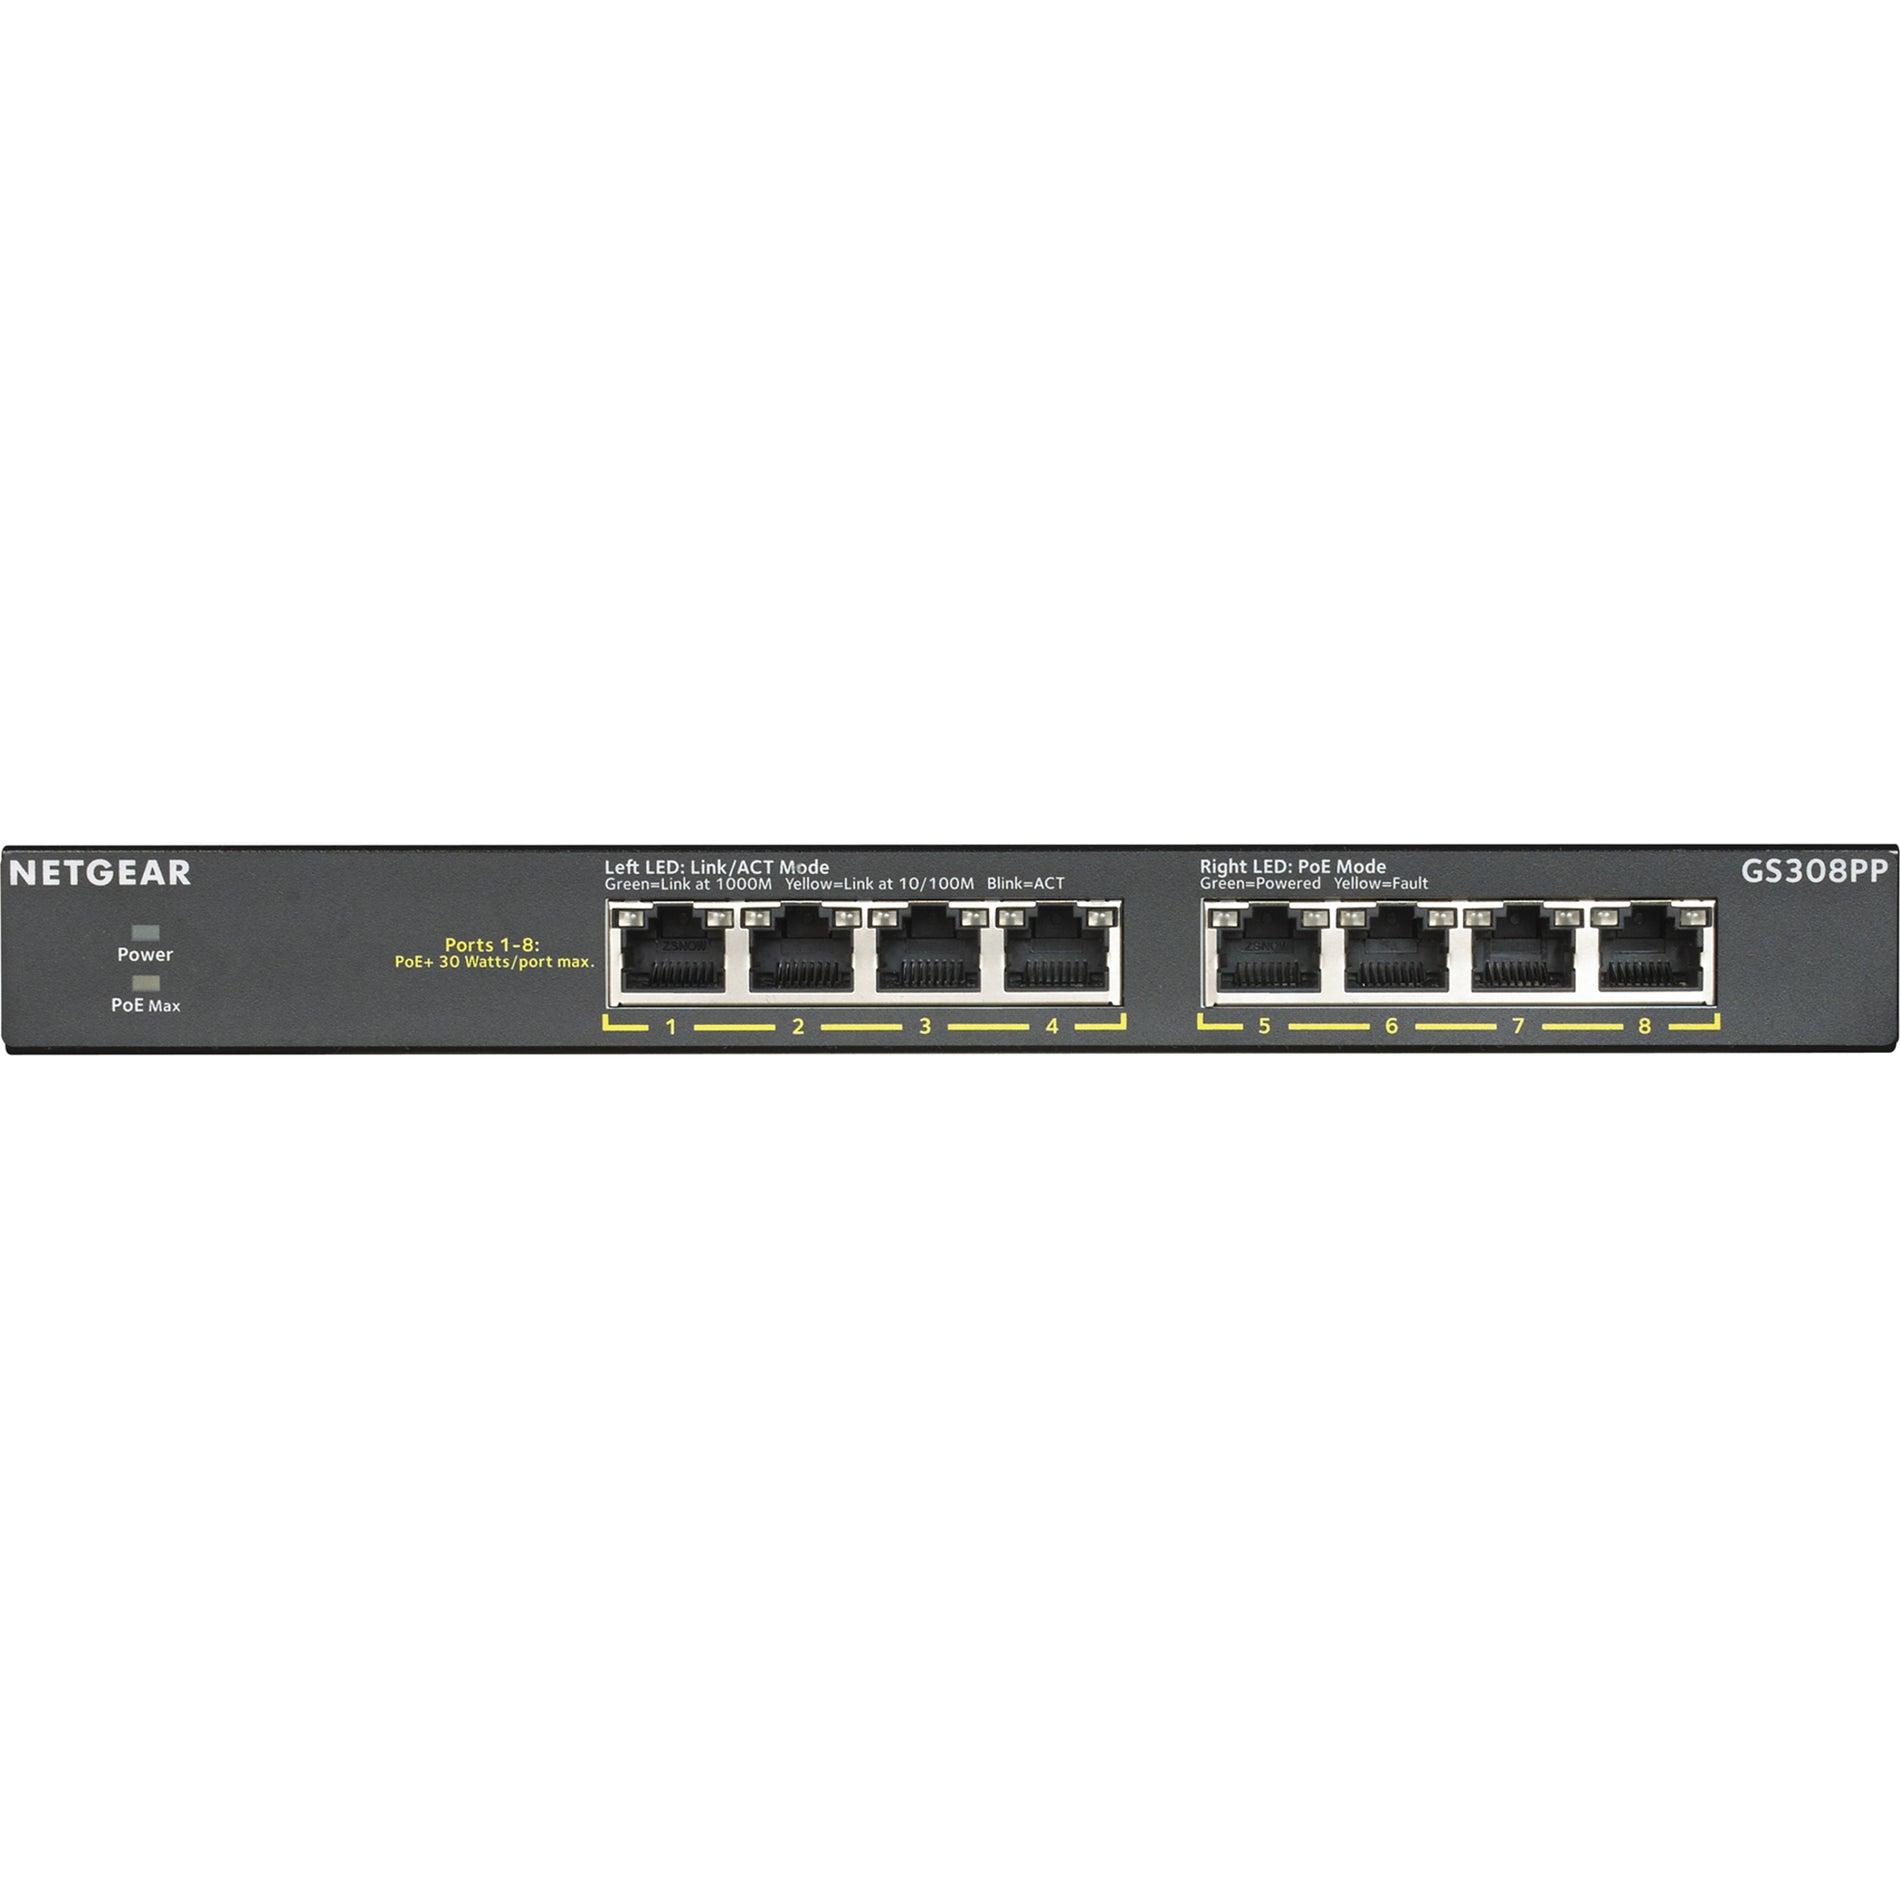 Netgear GS308PP-100NAS GS308PP Ethernet Switch 8 Port Gigabit Ethernet PoE+ 3 Year Lifetime Warranty